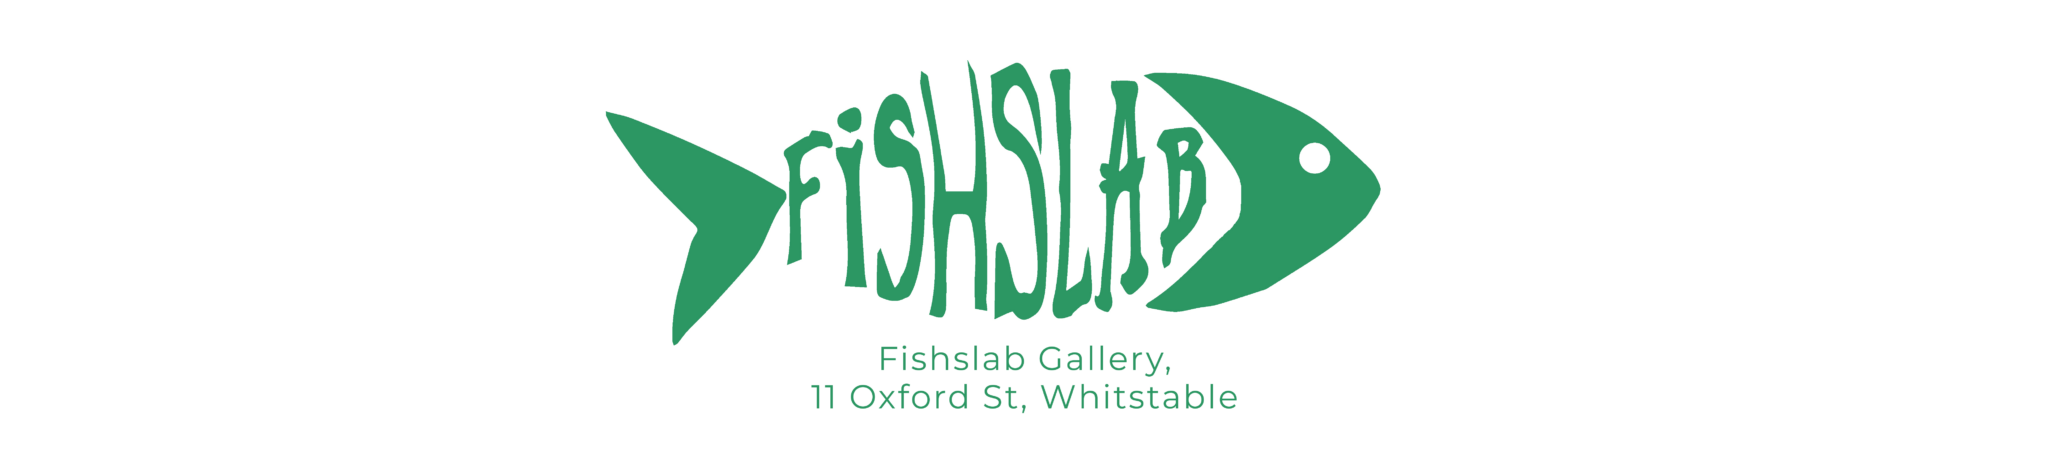 Fishslab Gallery